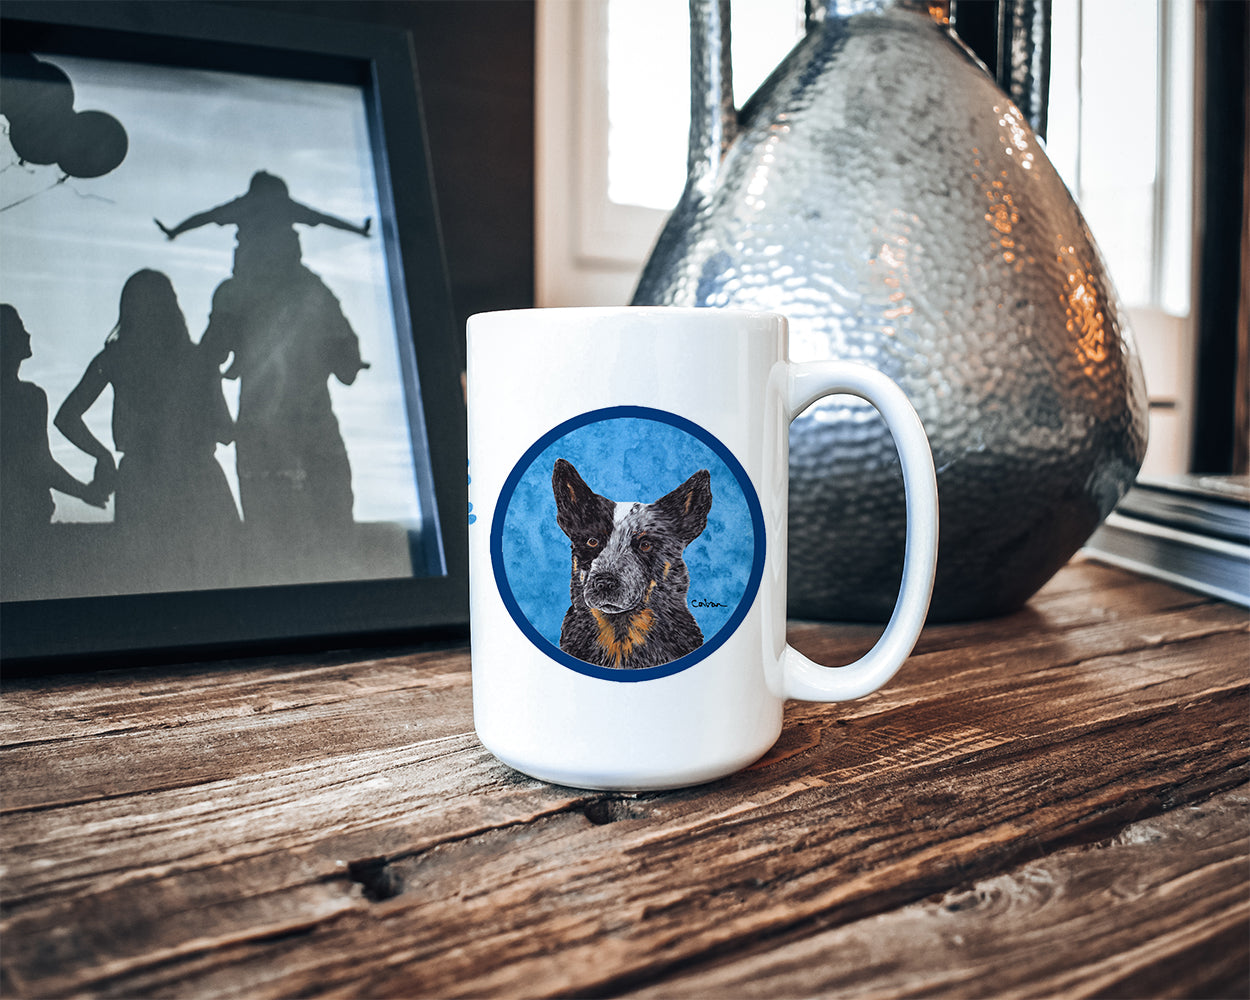 Australian Cattle Dog Dishwasher Safe Microwavable Ceramic Coffee Mug 15 ounce